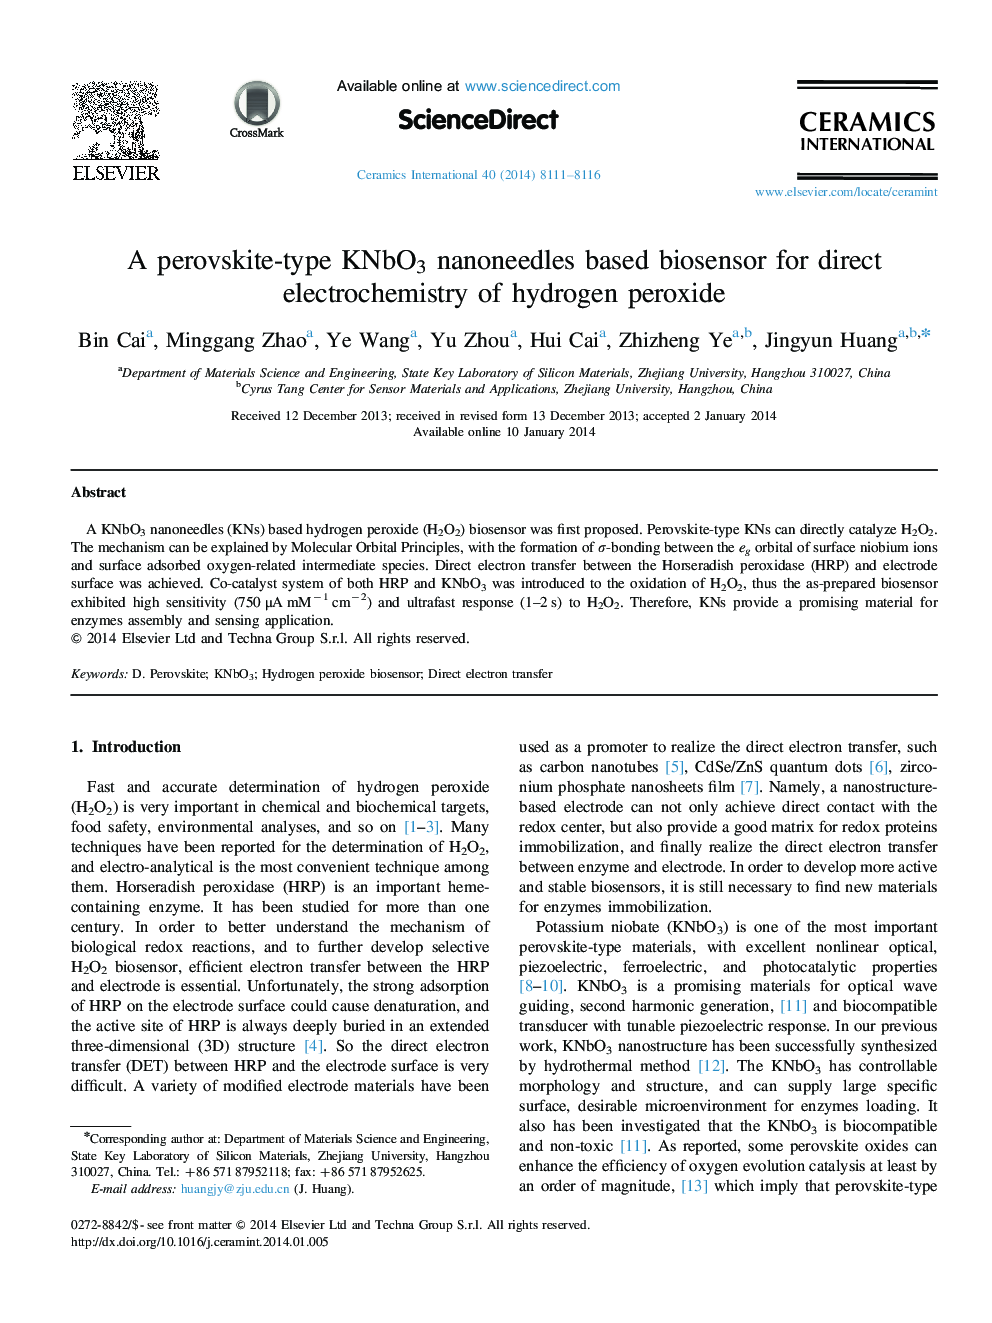 A perovskite-type KNbO3 nanoneedles based biosensor for direct electrochemistry of hydrogen peroxide